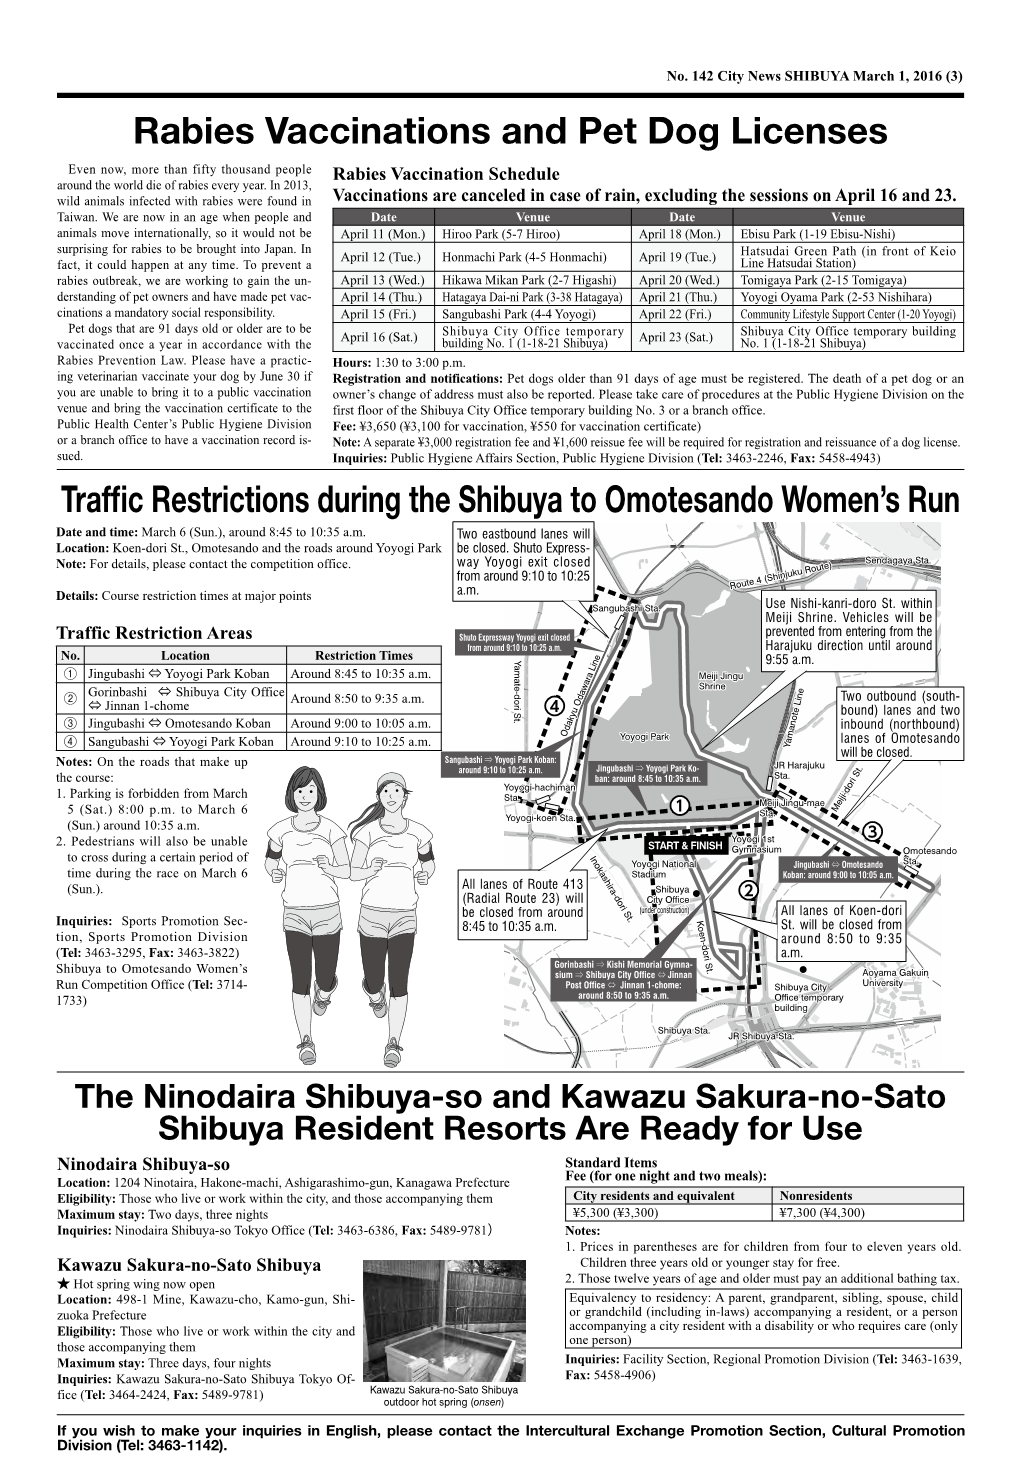 City News SHIBUYA March 1, 2016